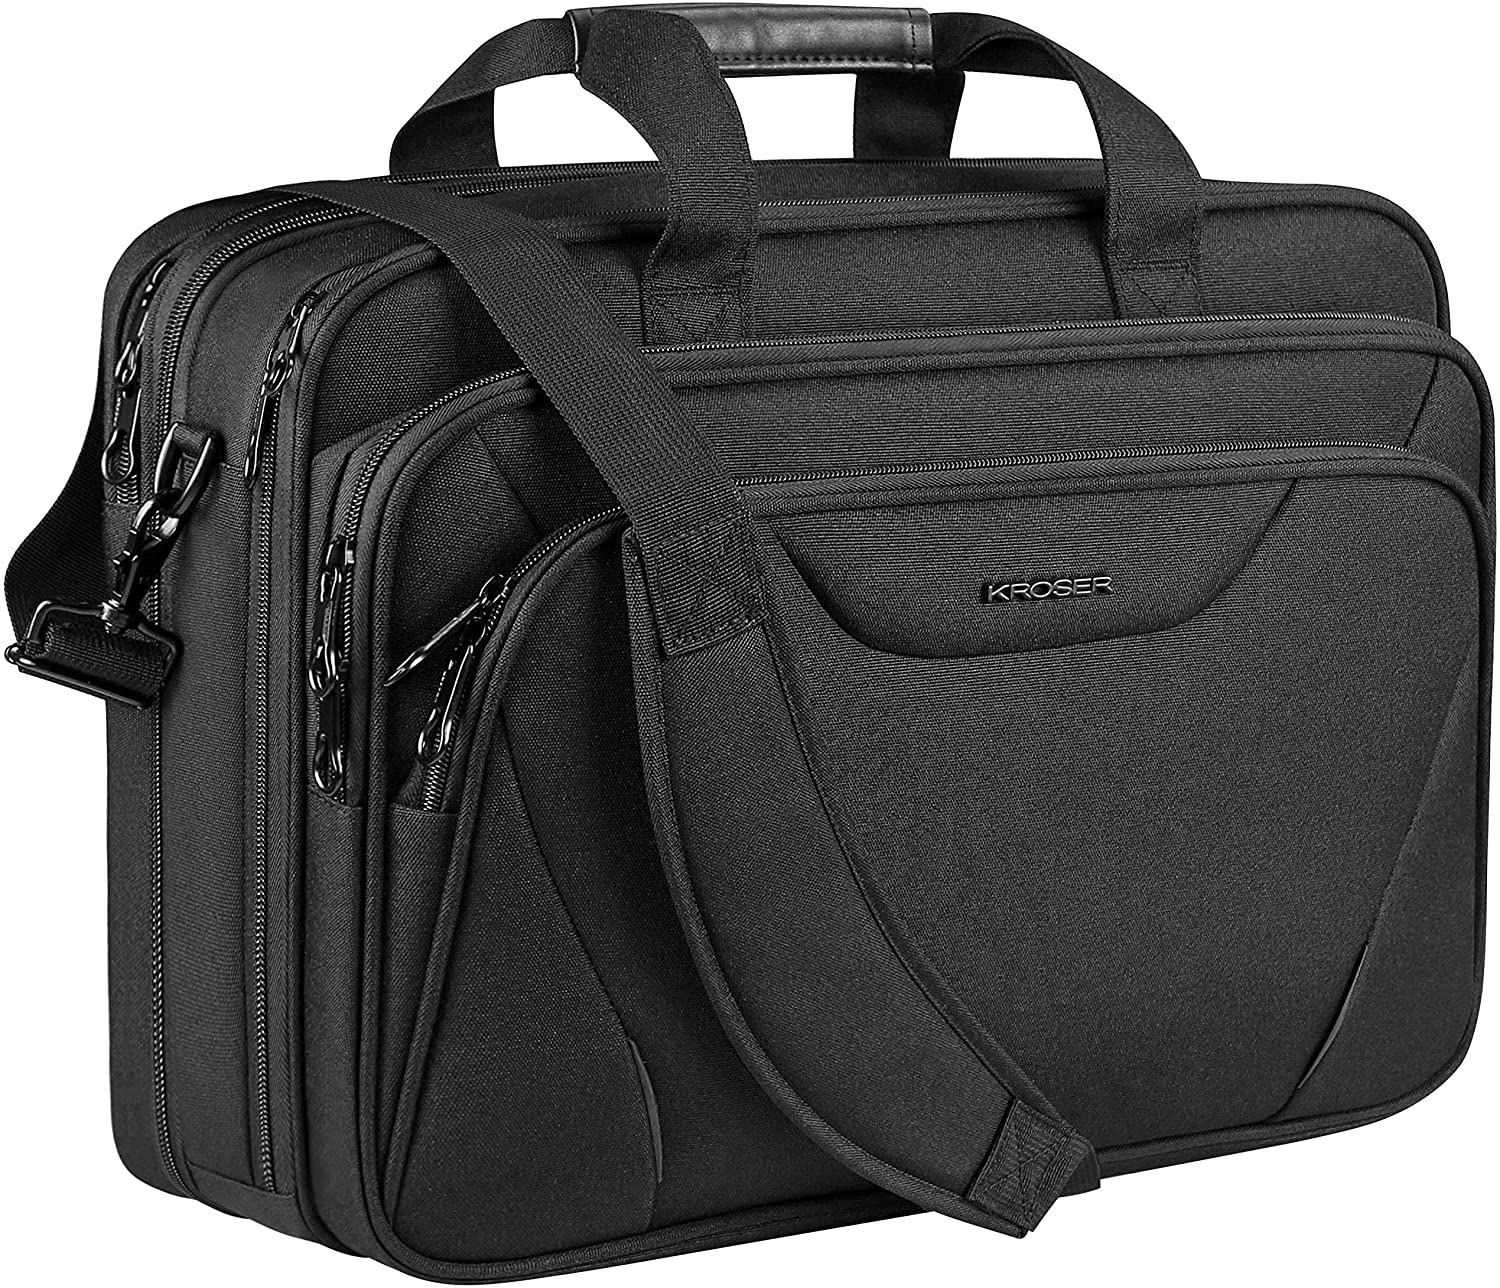 KROSER Laptop Bag Premium Computer Briefcase Fits up to 17.3 Inch Laptop Expanda